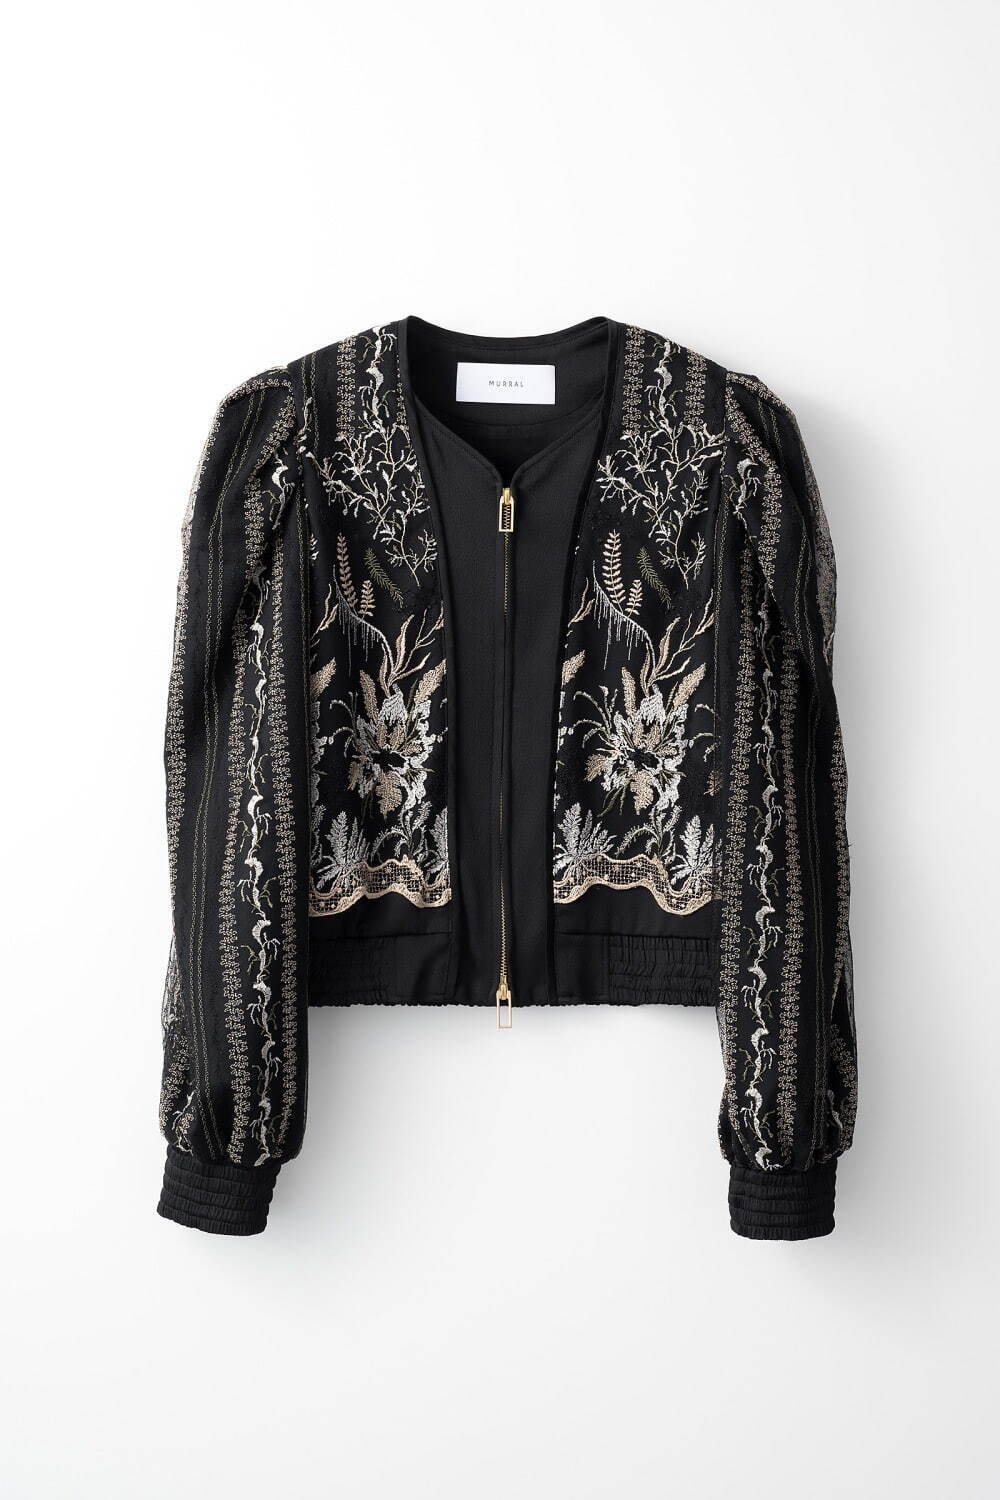 Petal lace zipped jacket  74,800円